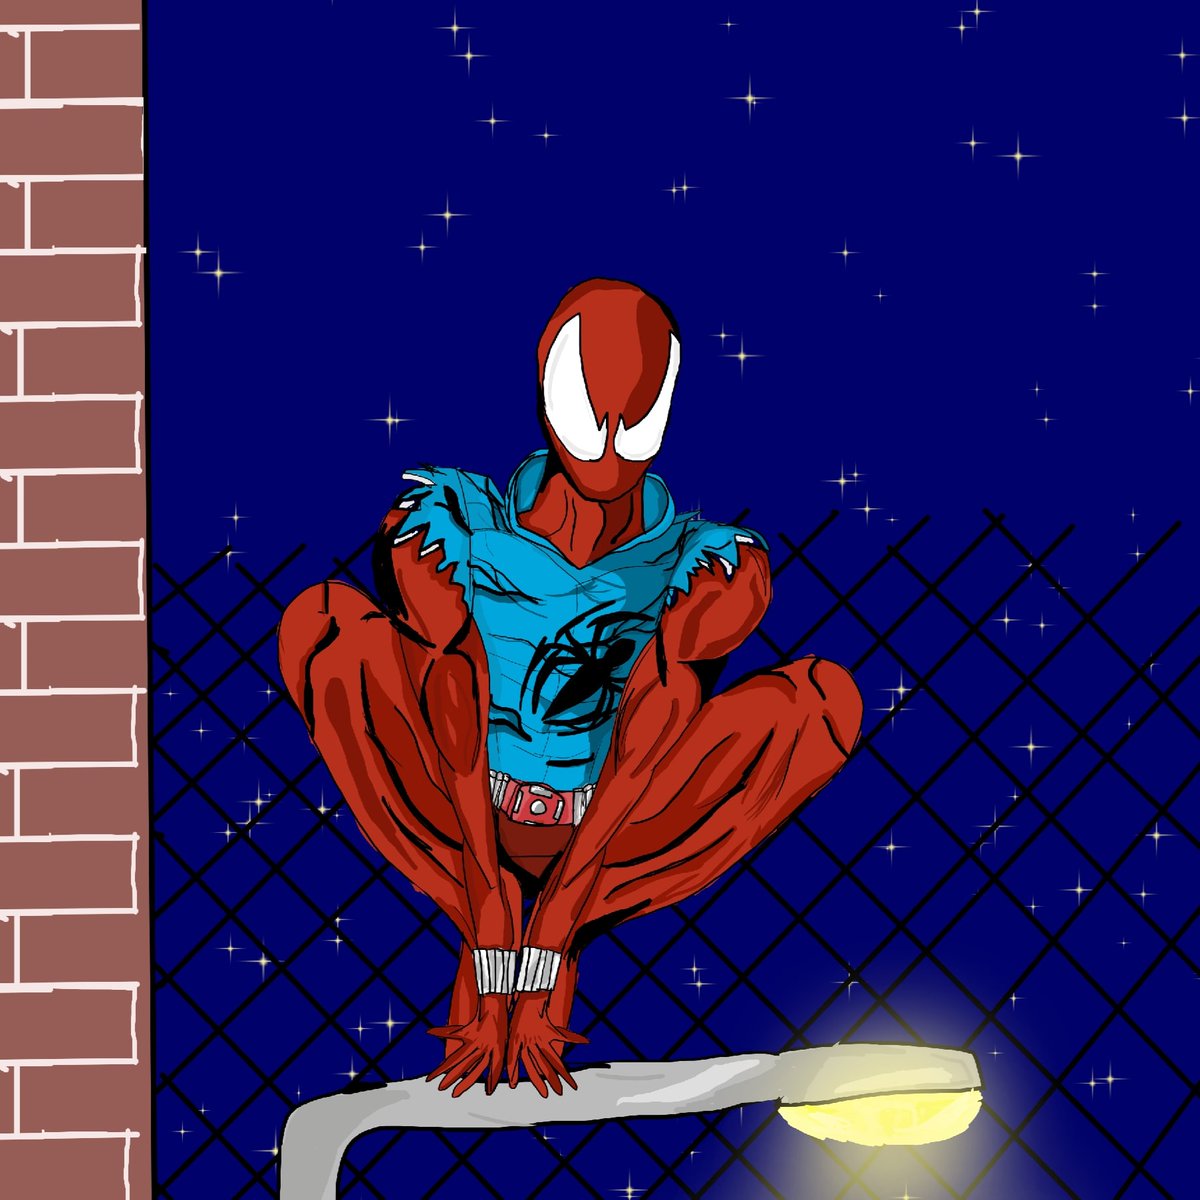 SCARLET SPIDER 

Drawn using CSP
#SpiderManAcrossTheSpiderVerse #SpiderMan #scarletspider #comics #marvel #MarvelsSpiderMan2